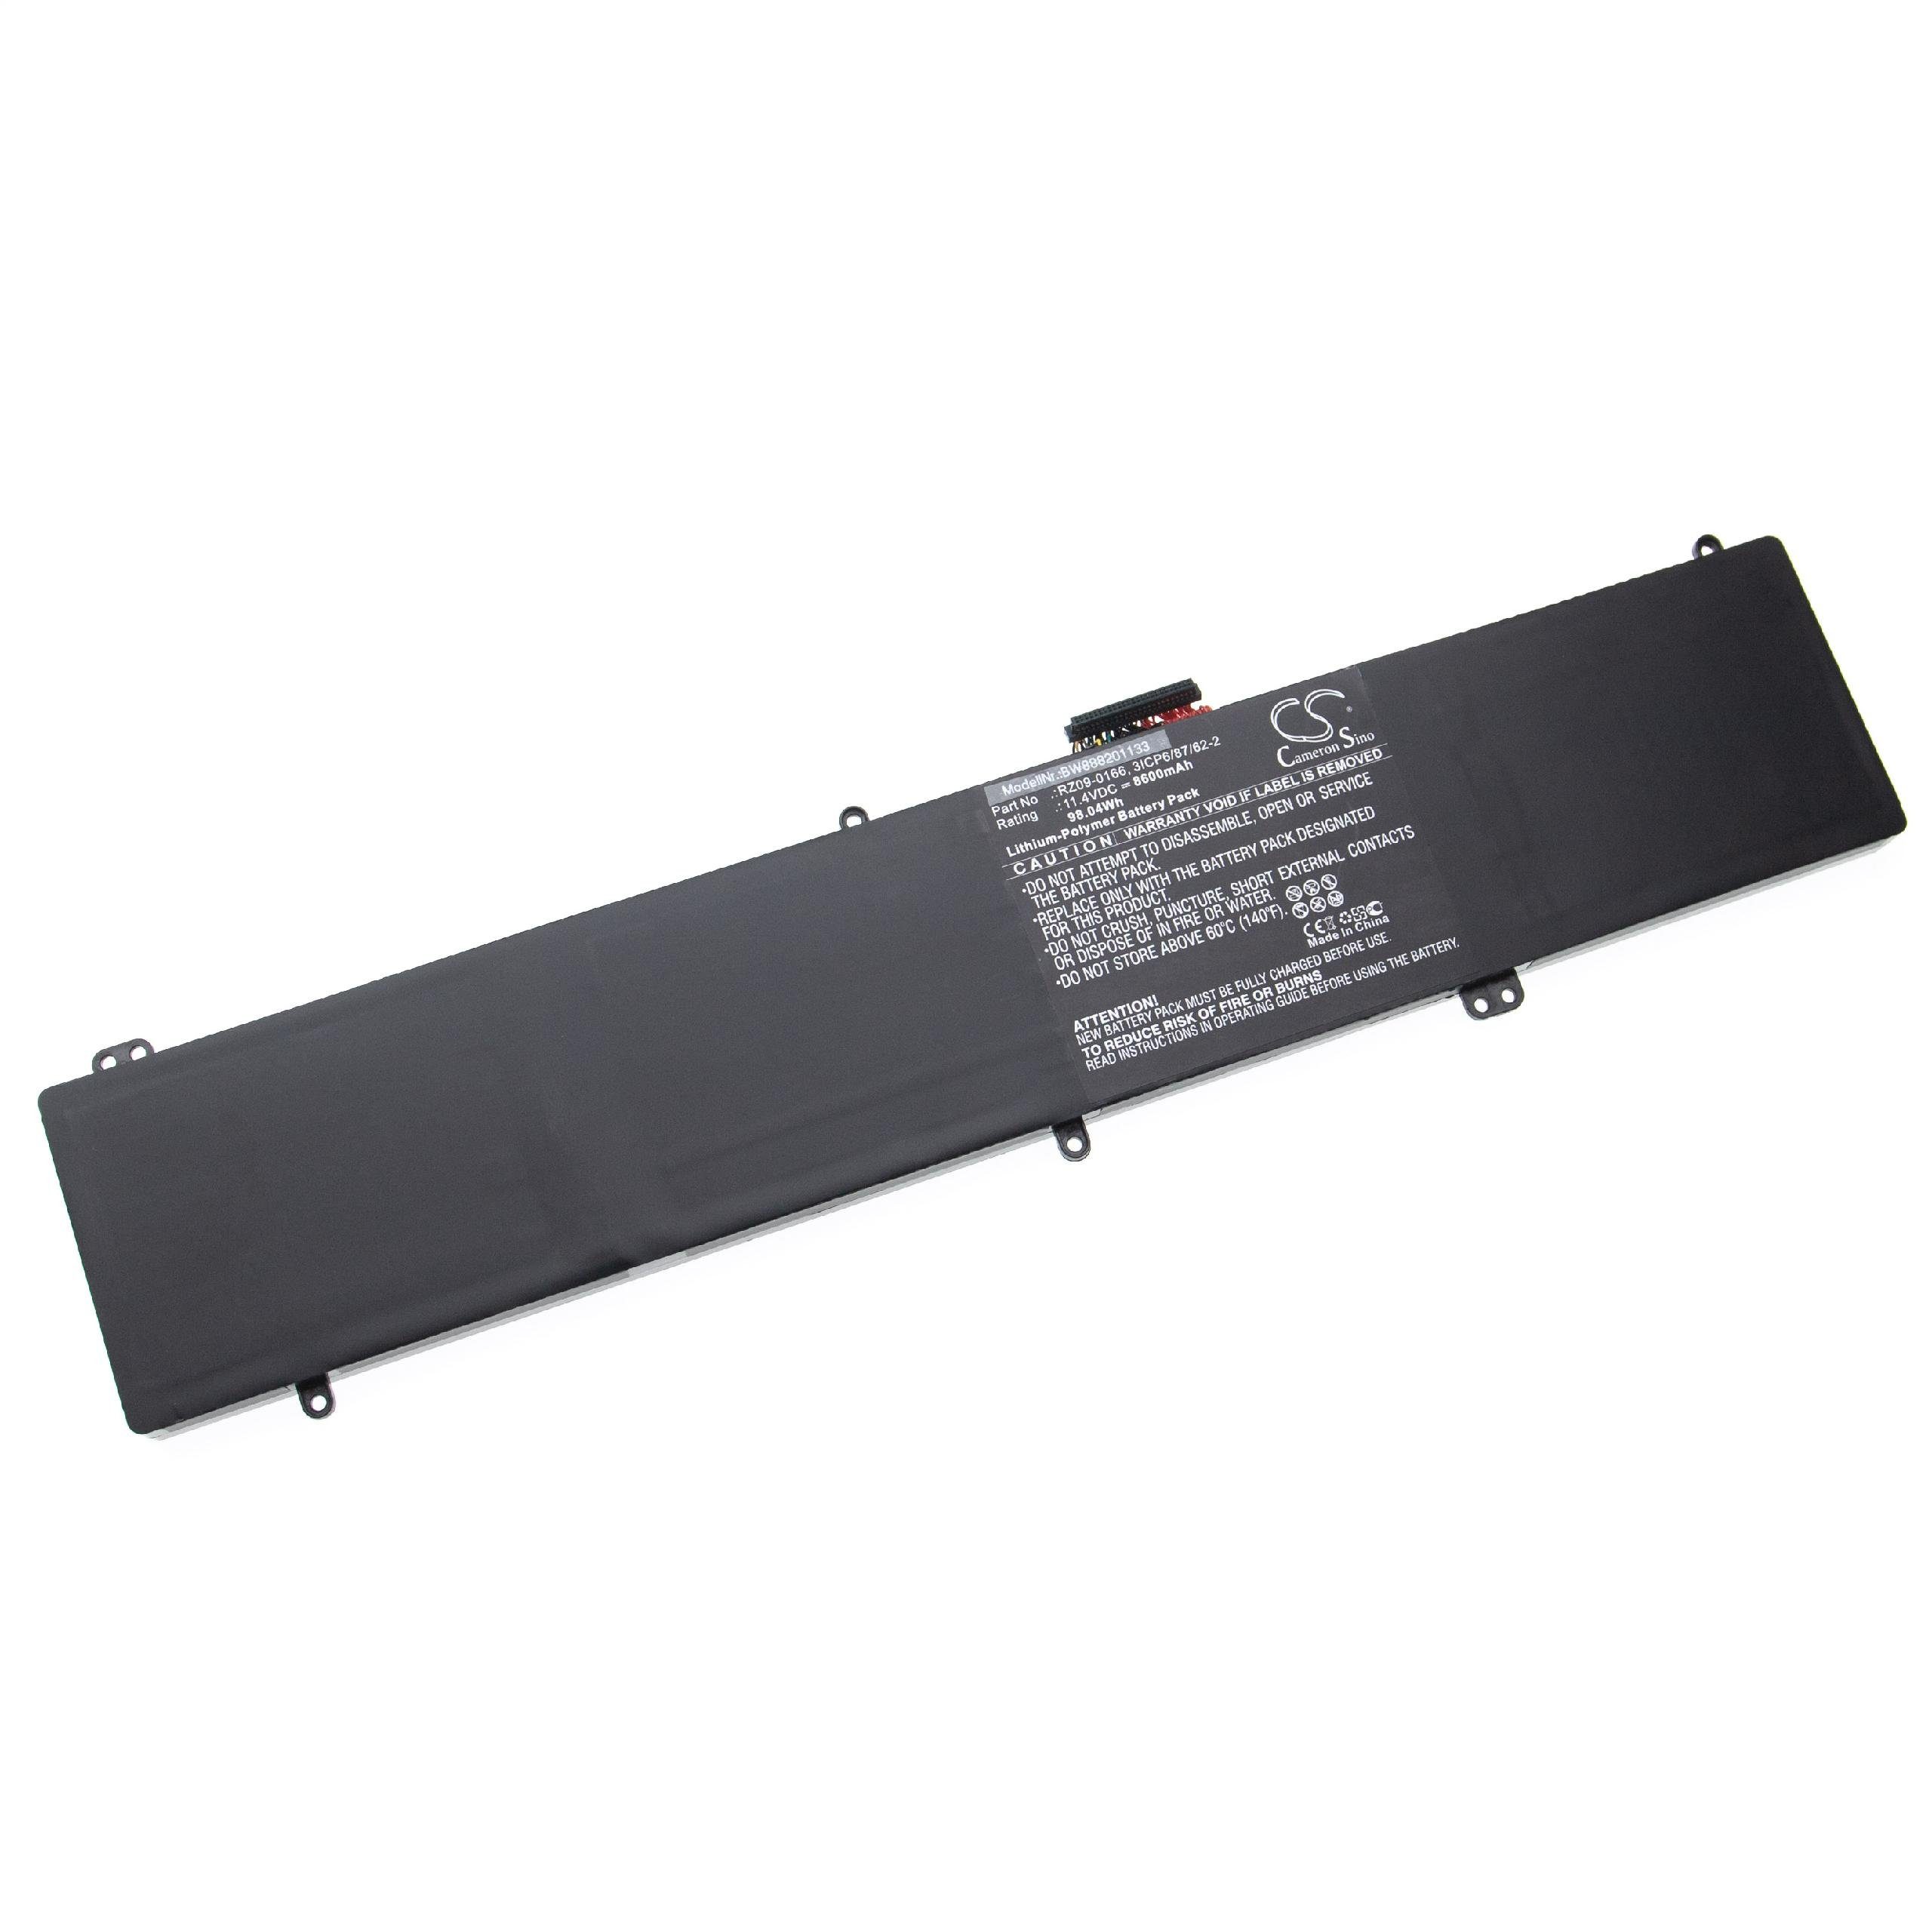 Vorbildlich vhbw kompatibel mit V) Laptop-Akku Razer Blade 8600 (11,4 mAh Li-Polymer RZ09-01663E54-R3U1